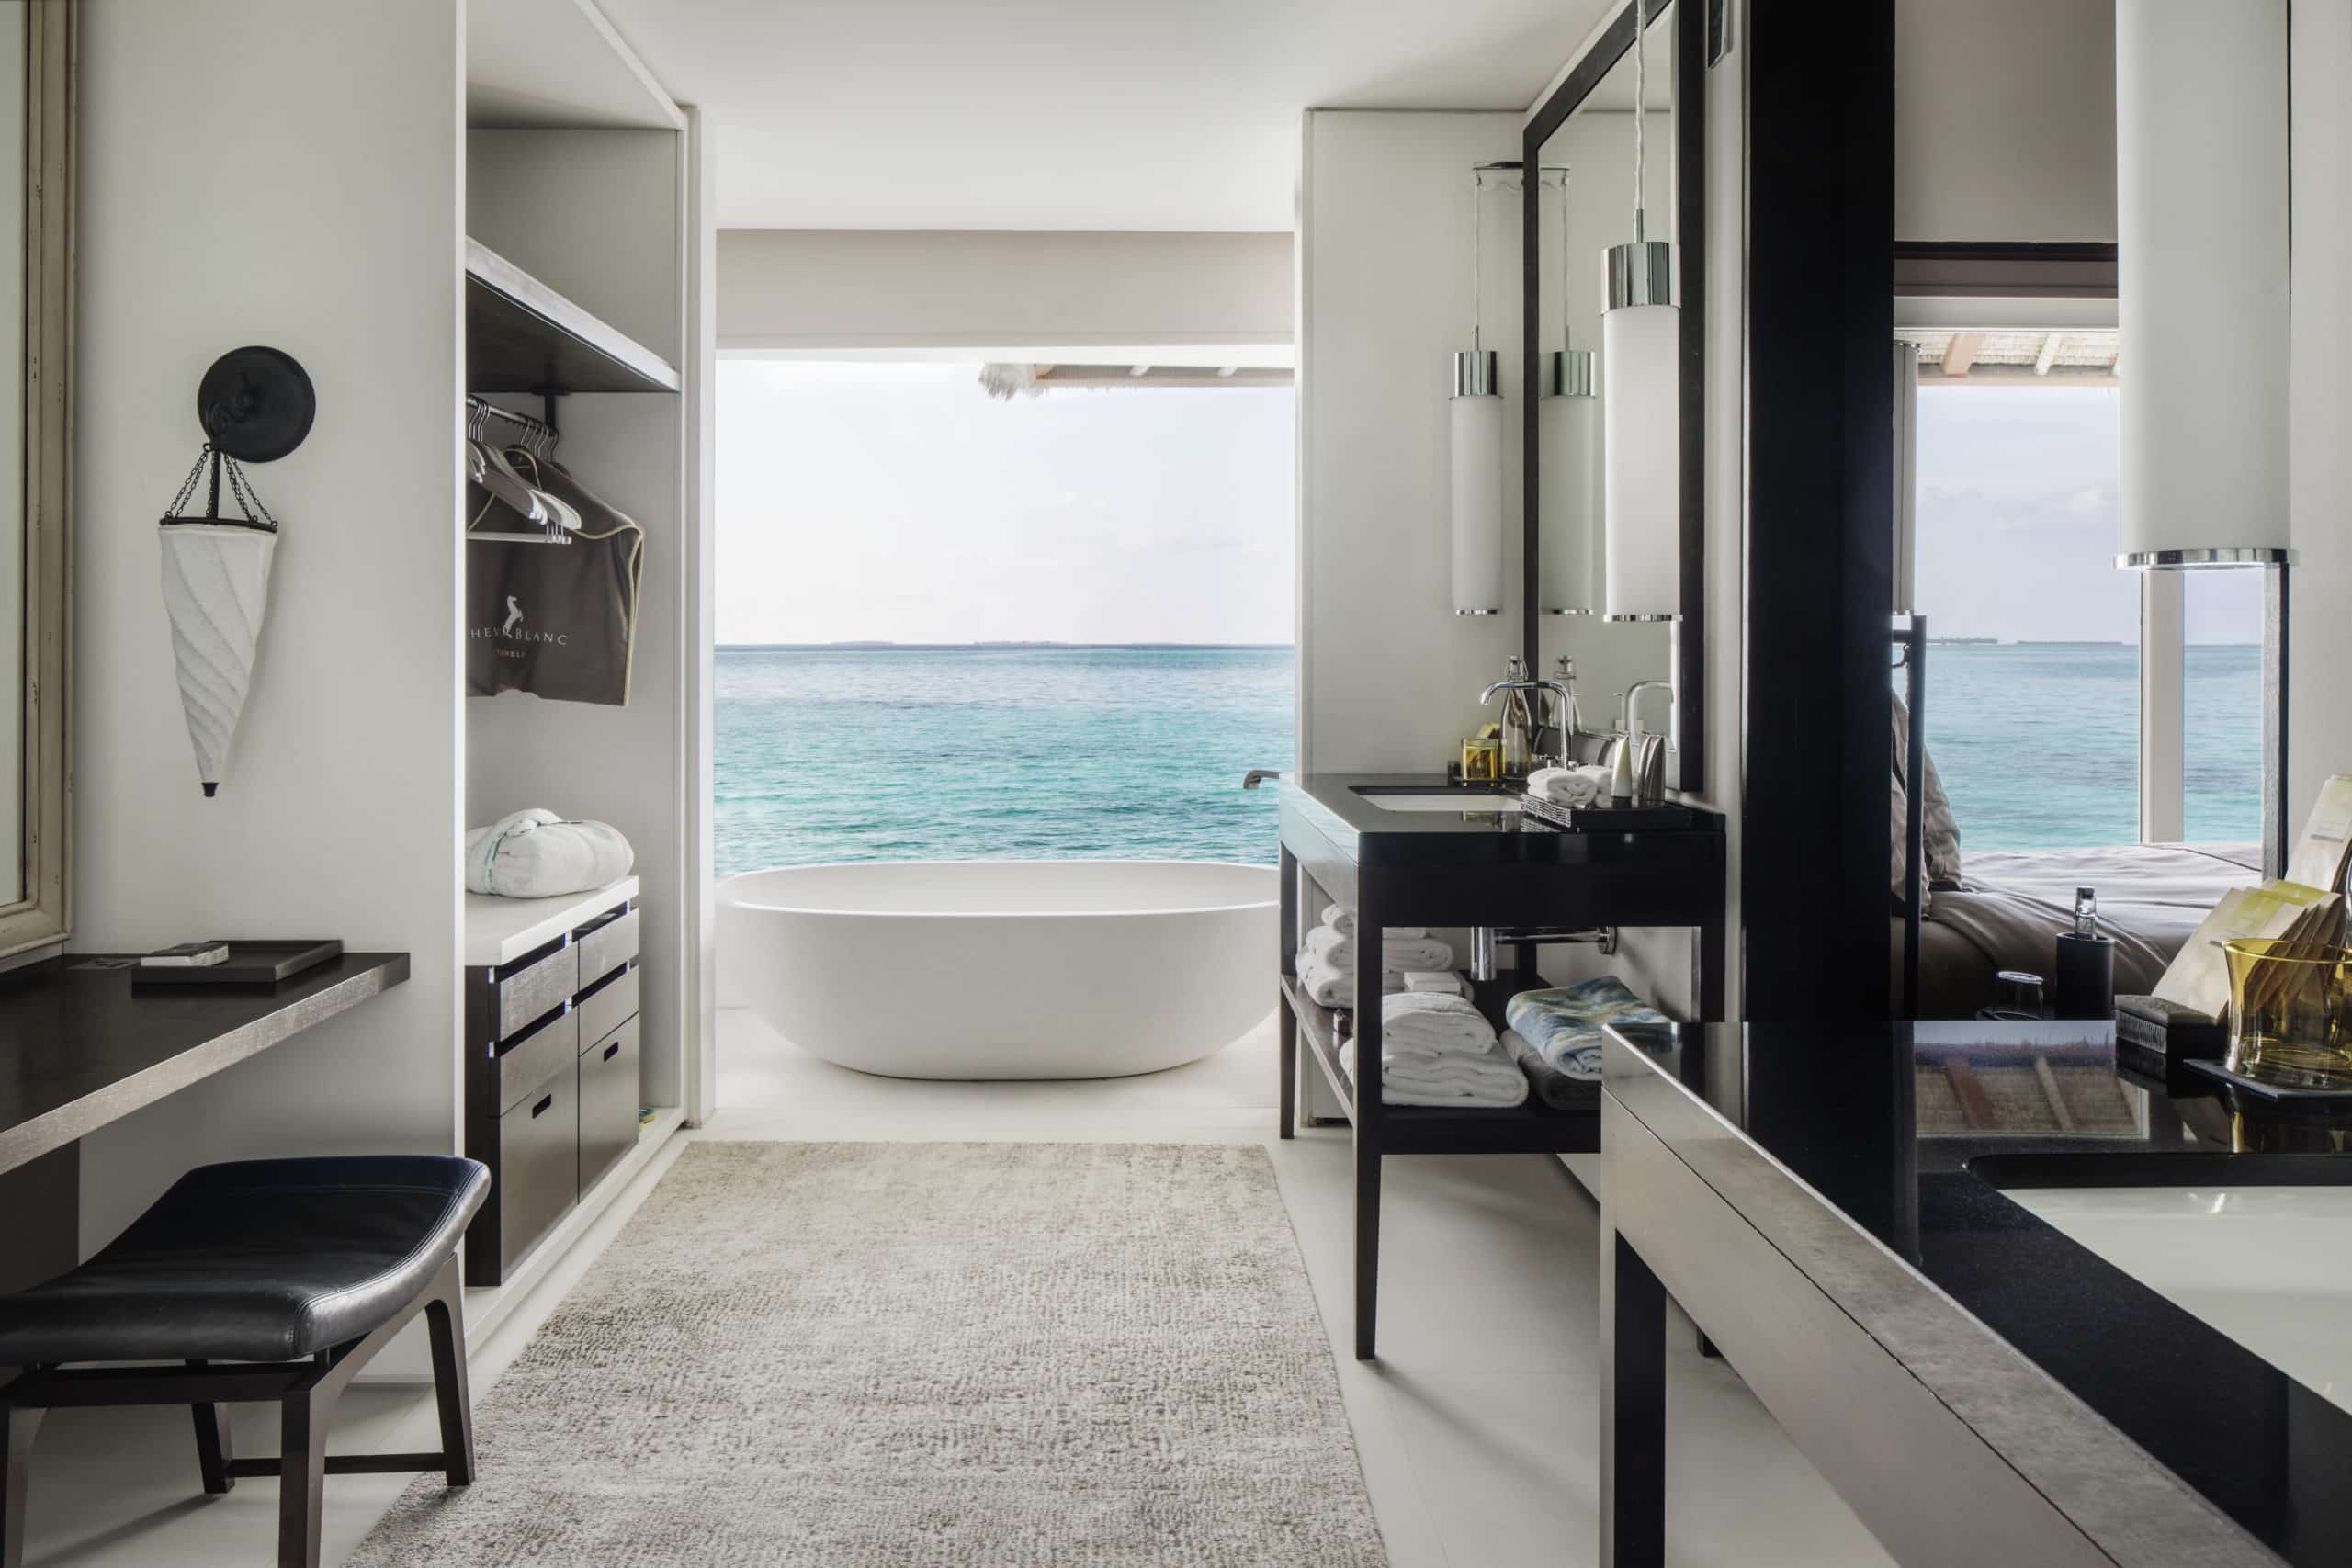 Cheval Blanc Randheli Maldives, a Dream Hotel for Design and Art